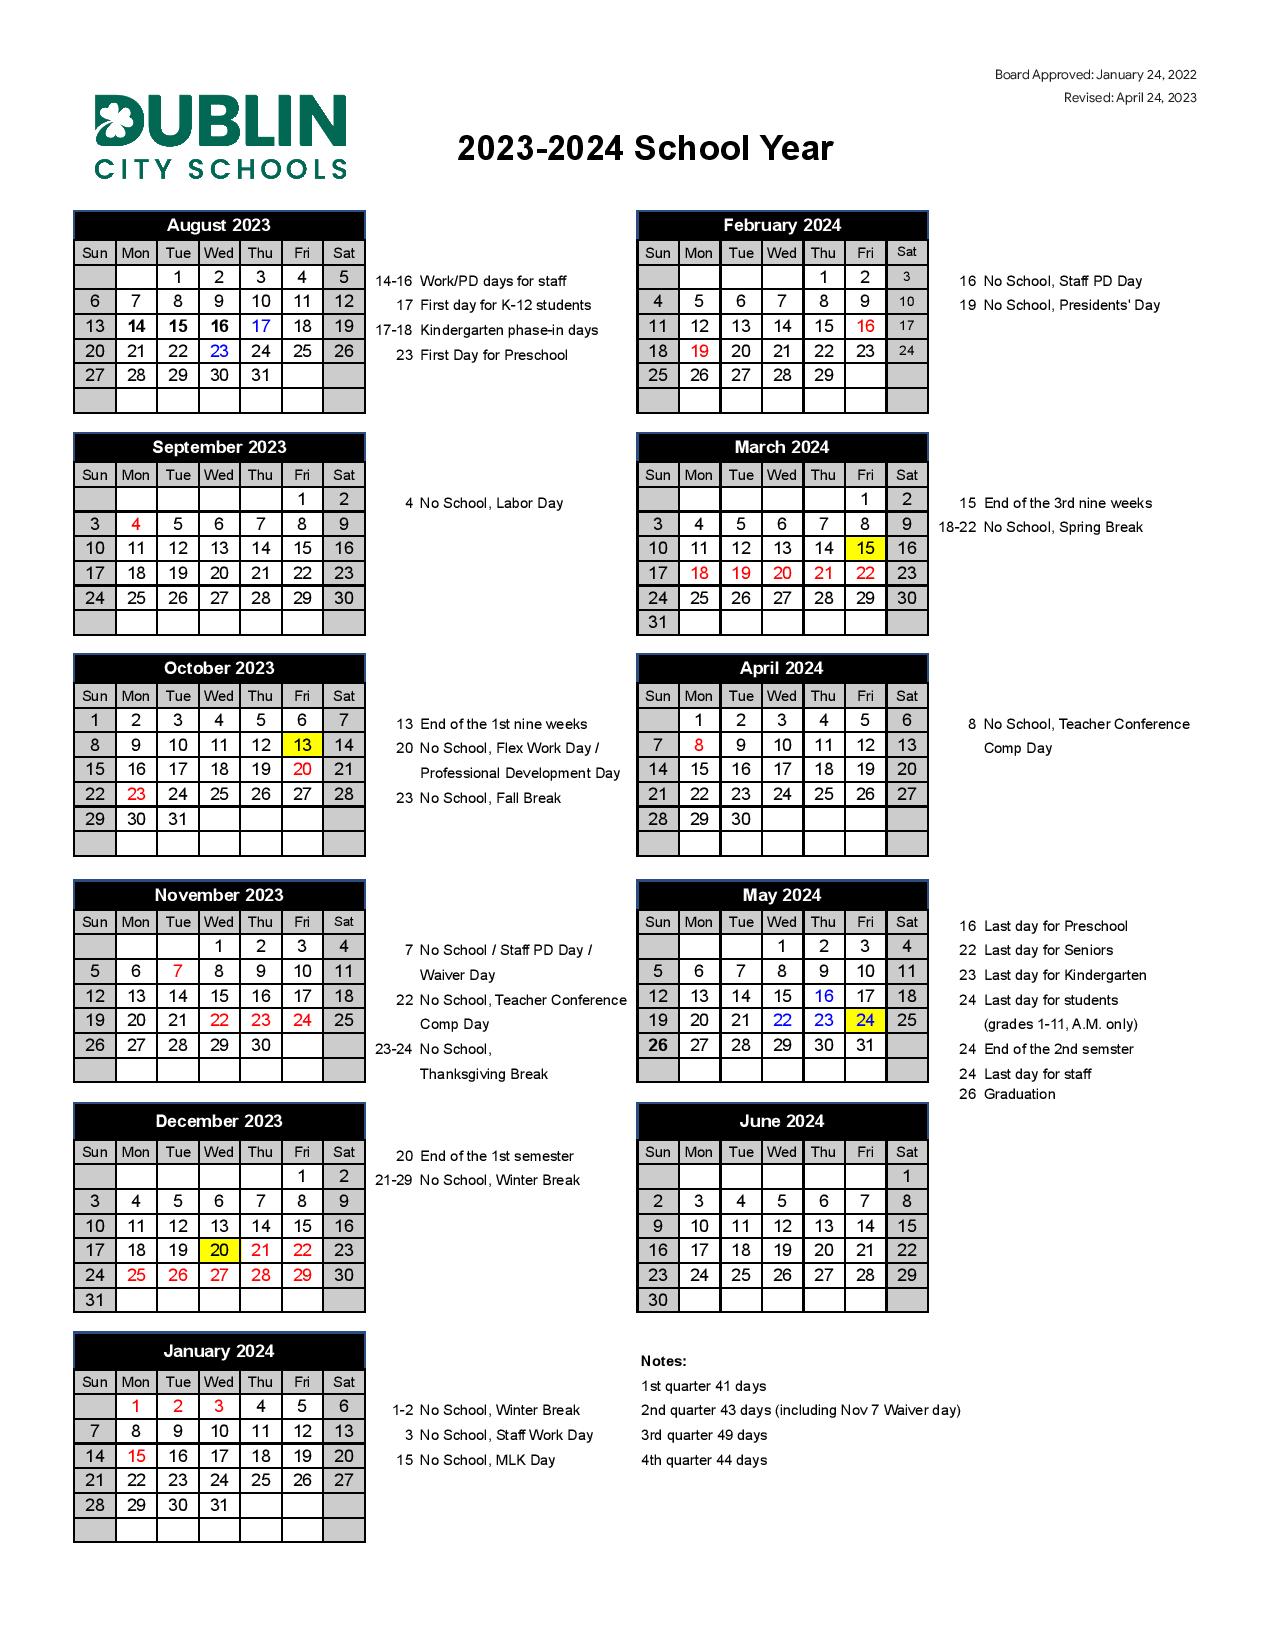 dublin-city-schools-calendar-2023-2024-holiday-breaks